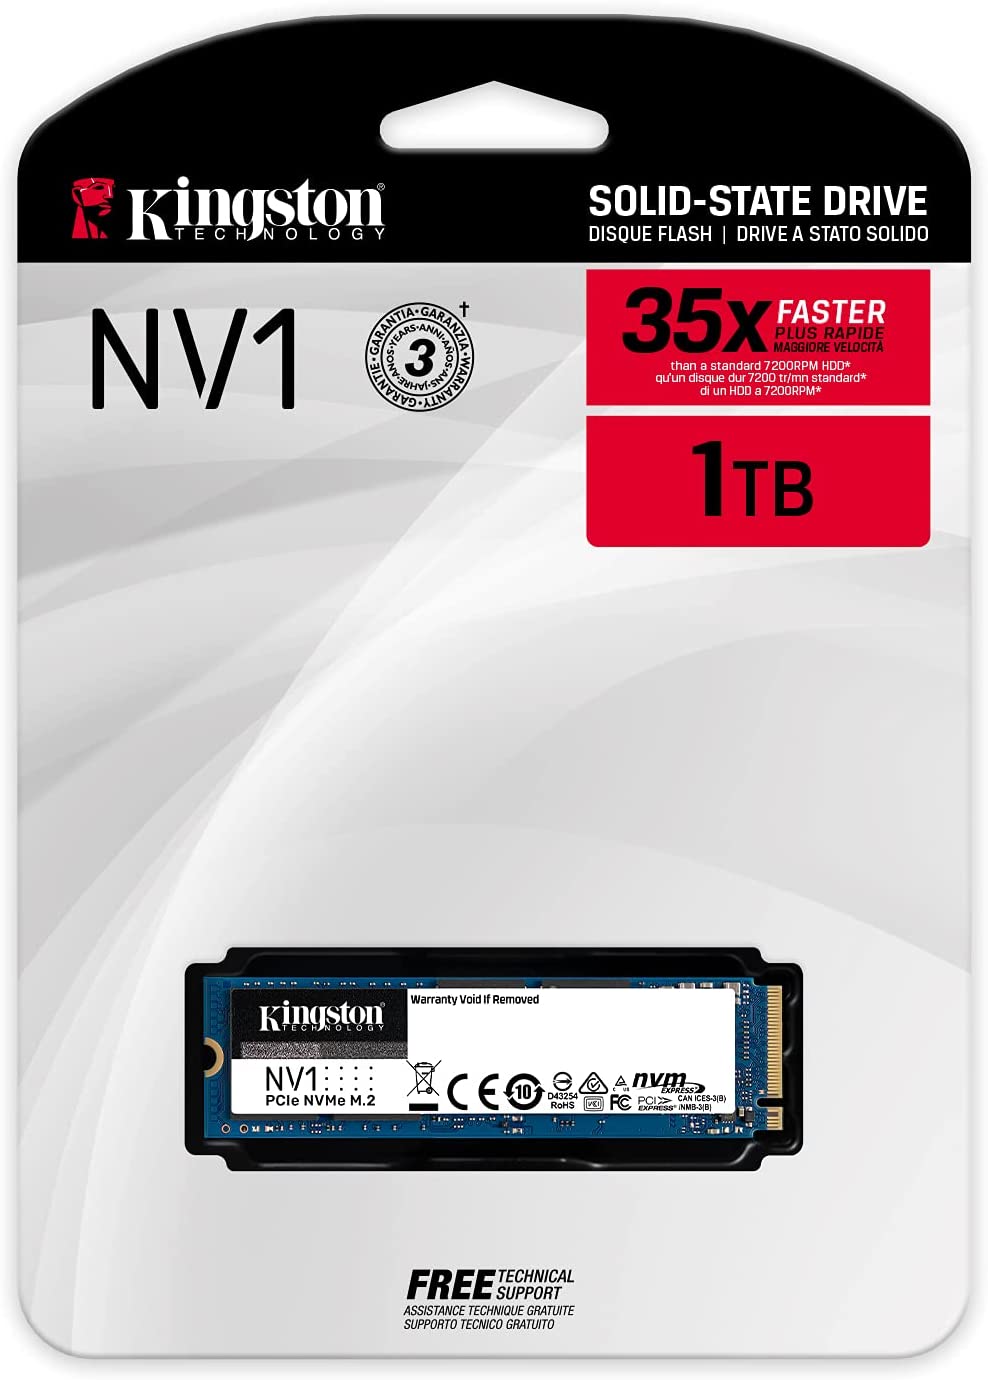 Kingston NV1 250GB - 500GB - 1TB M.2 2280 NVMe PCIe Internal SSD Up to 2100 MB/s